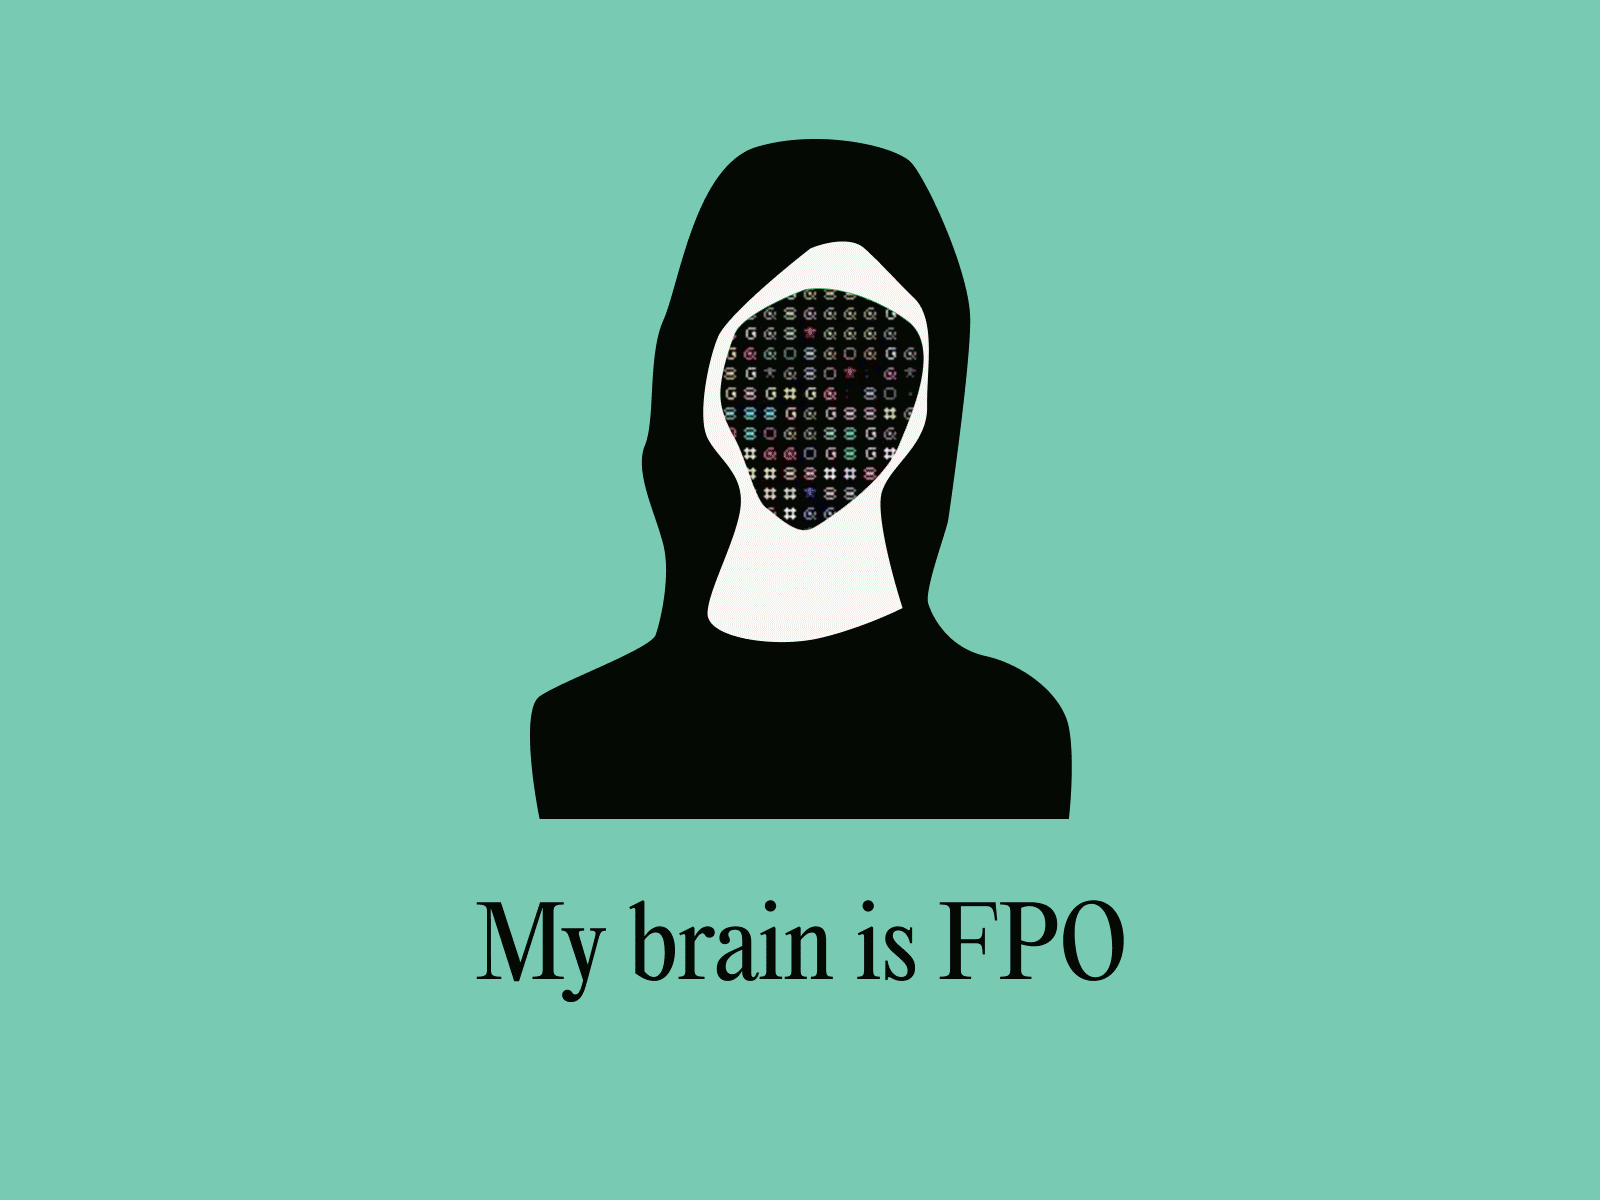 My brain is FPO design